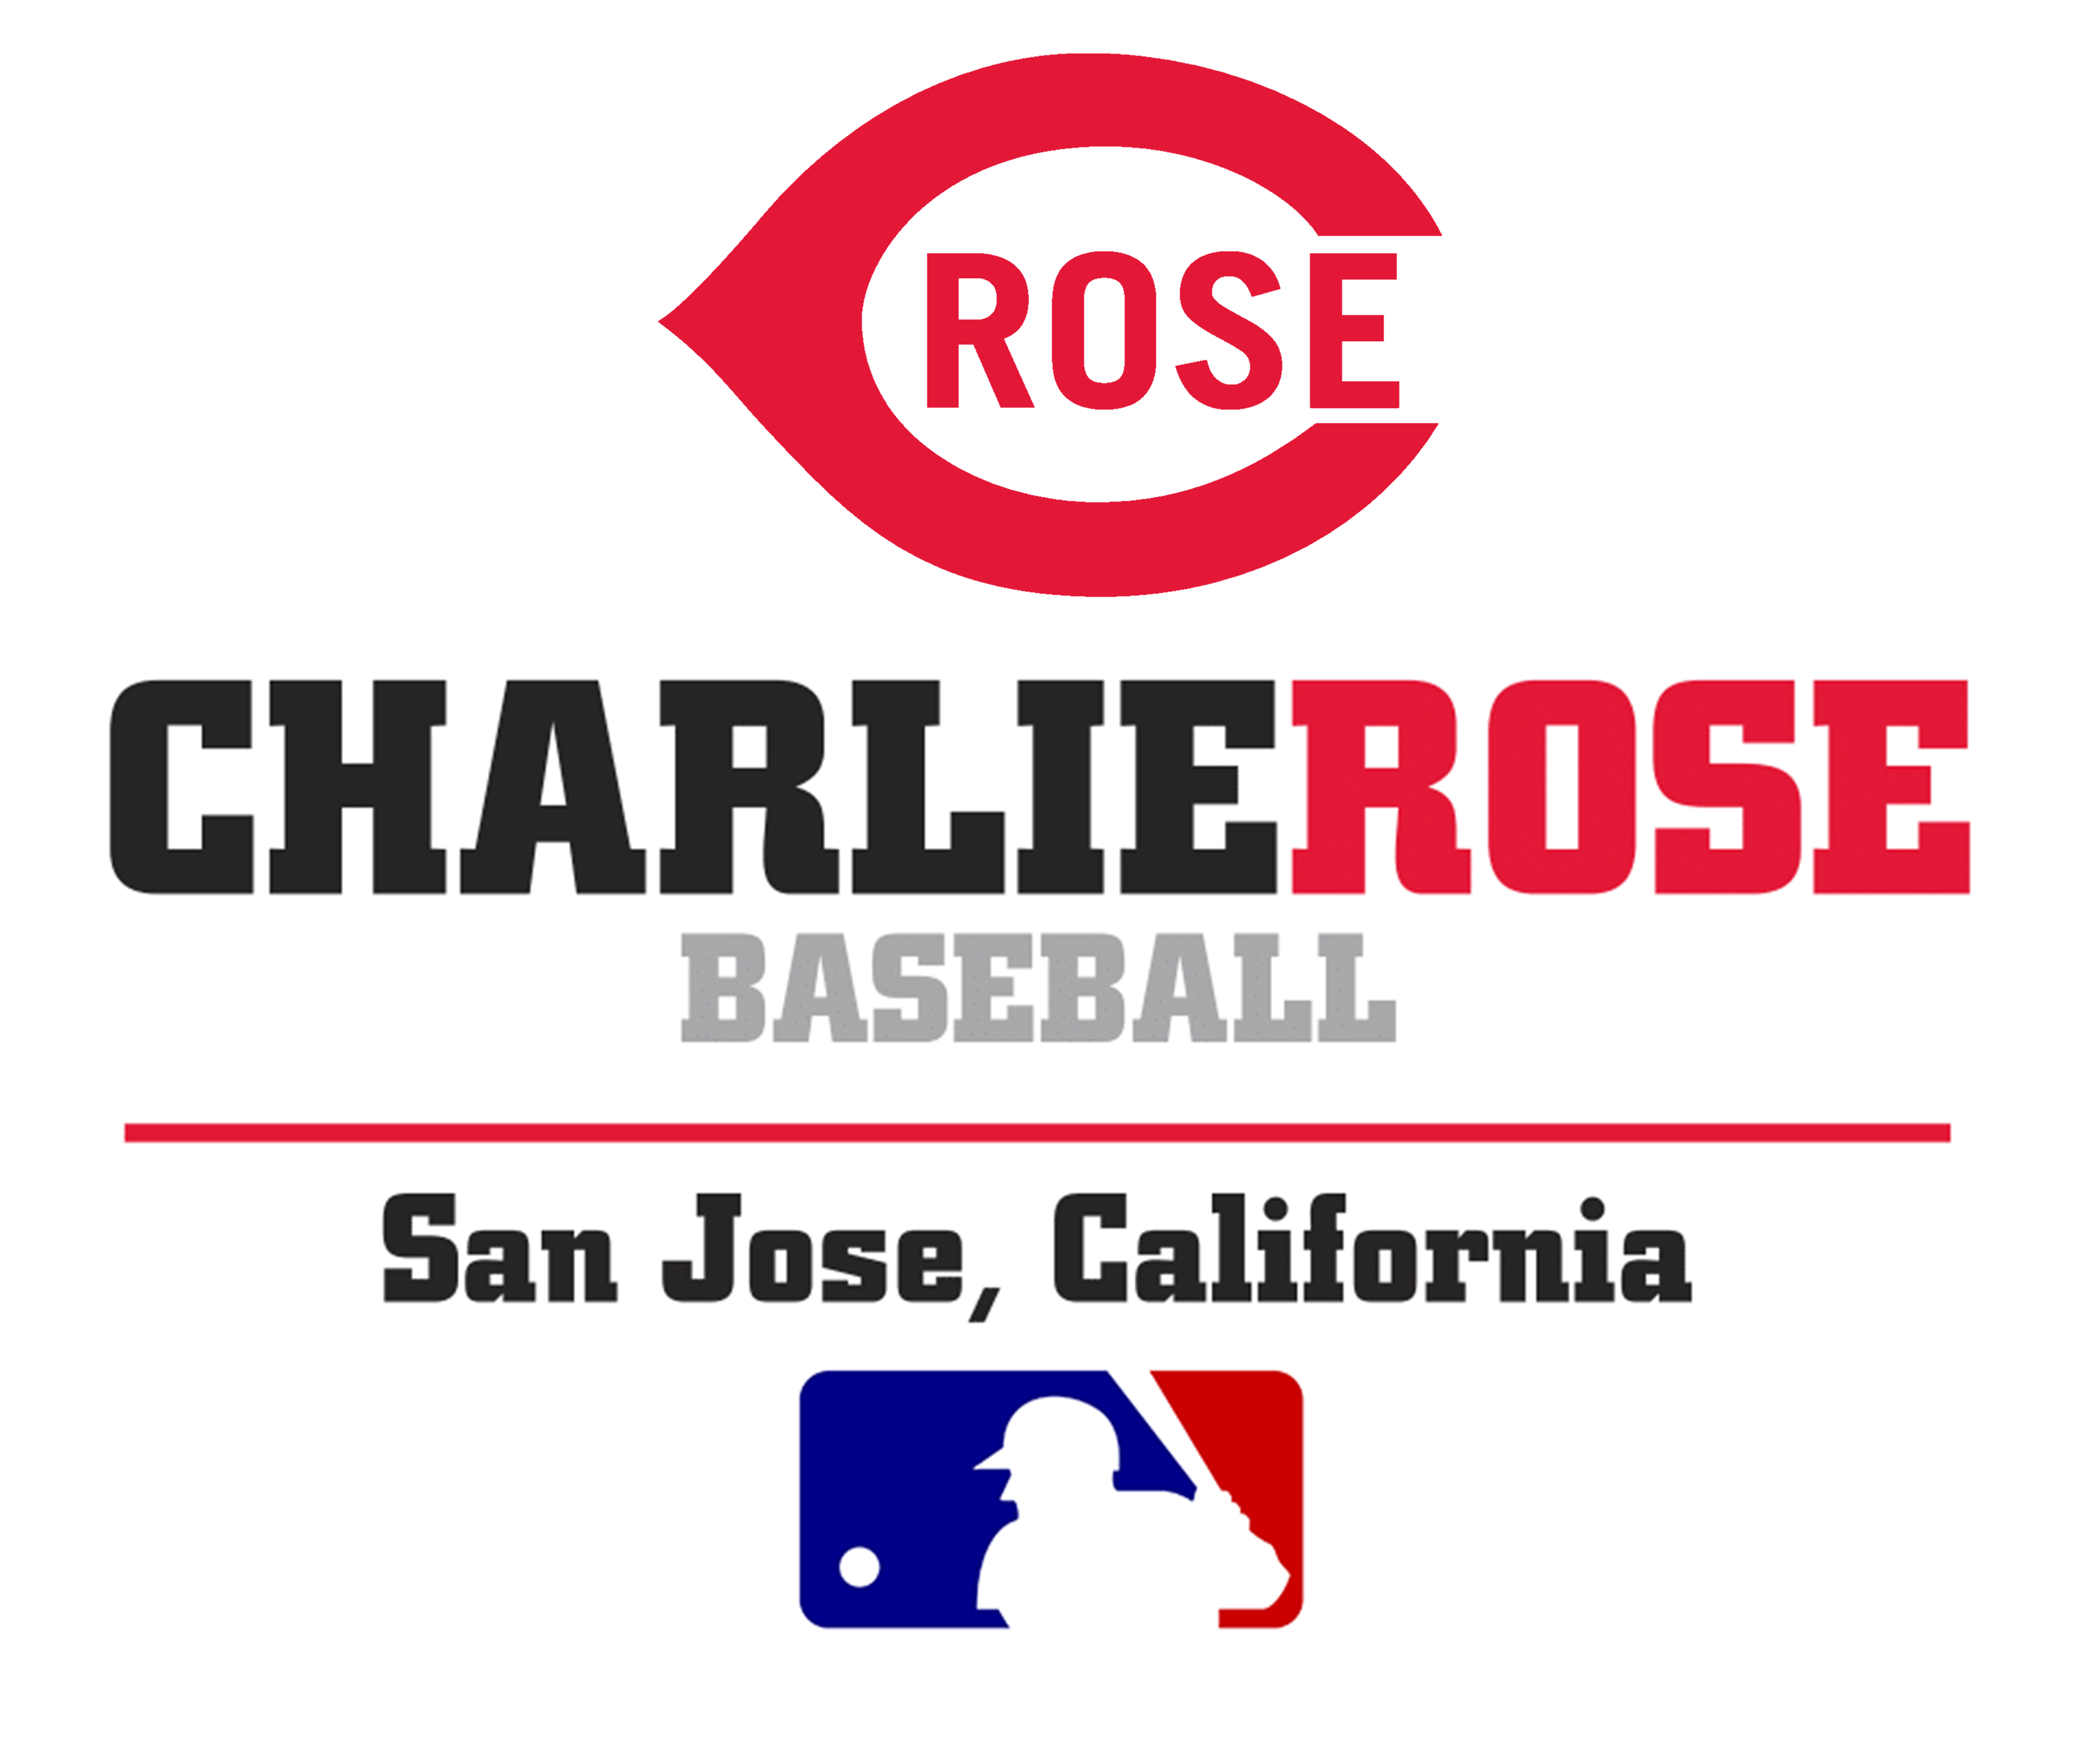 Gwynn Practice Jersey - Blue - San Diego Baseball Supply - Charlie Rose